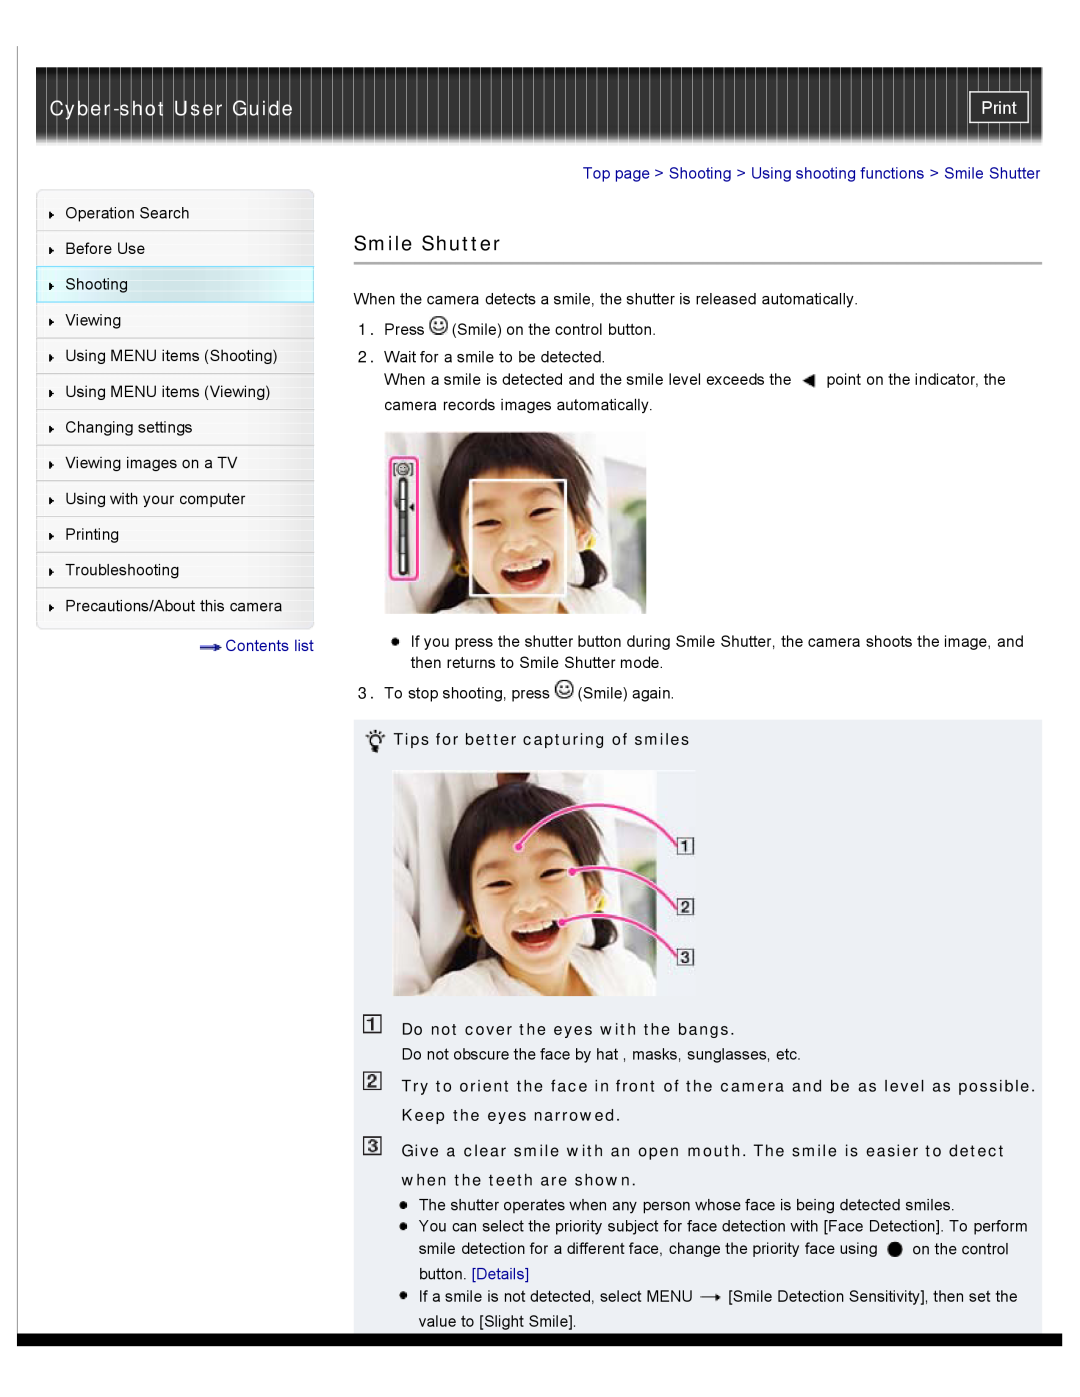 Sony DSCW530, DSC-W530 Smile Shutter, Cyber-shot User Guide, Print, Contents list, Tips for better capturing of smiles 